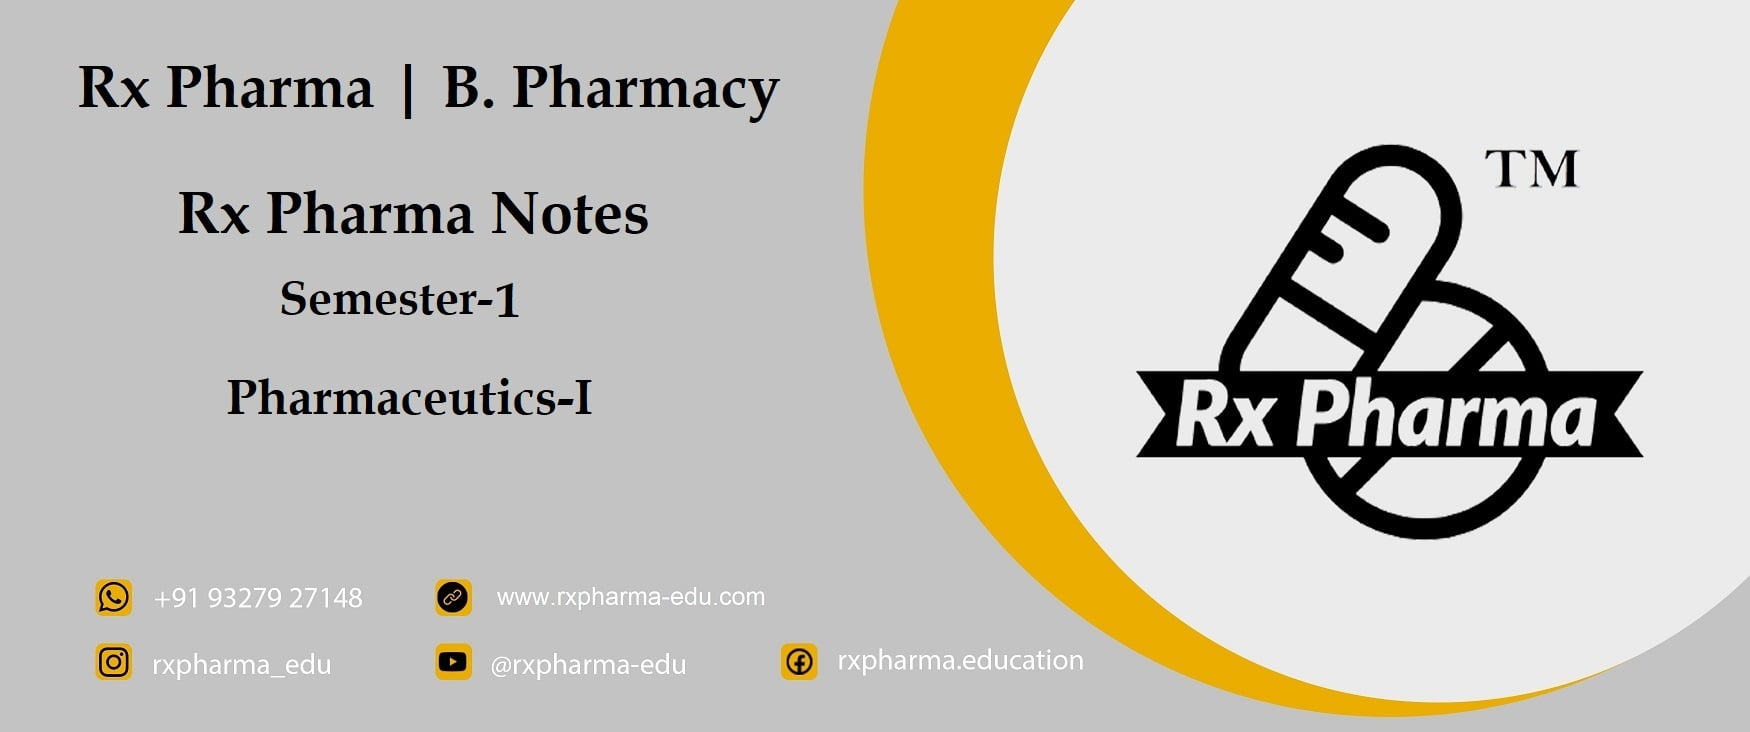 Pharmaceutics-1 Notes banner